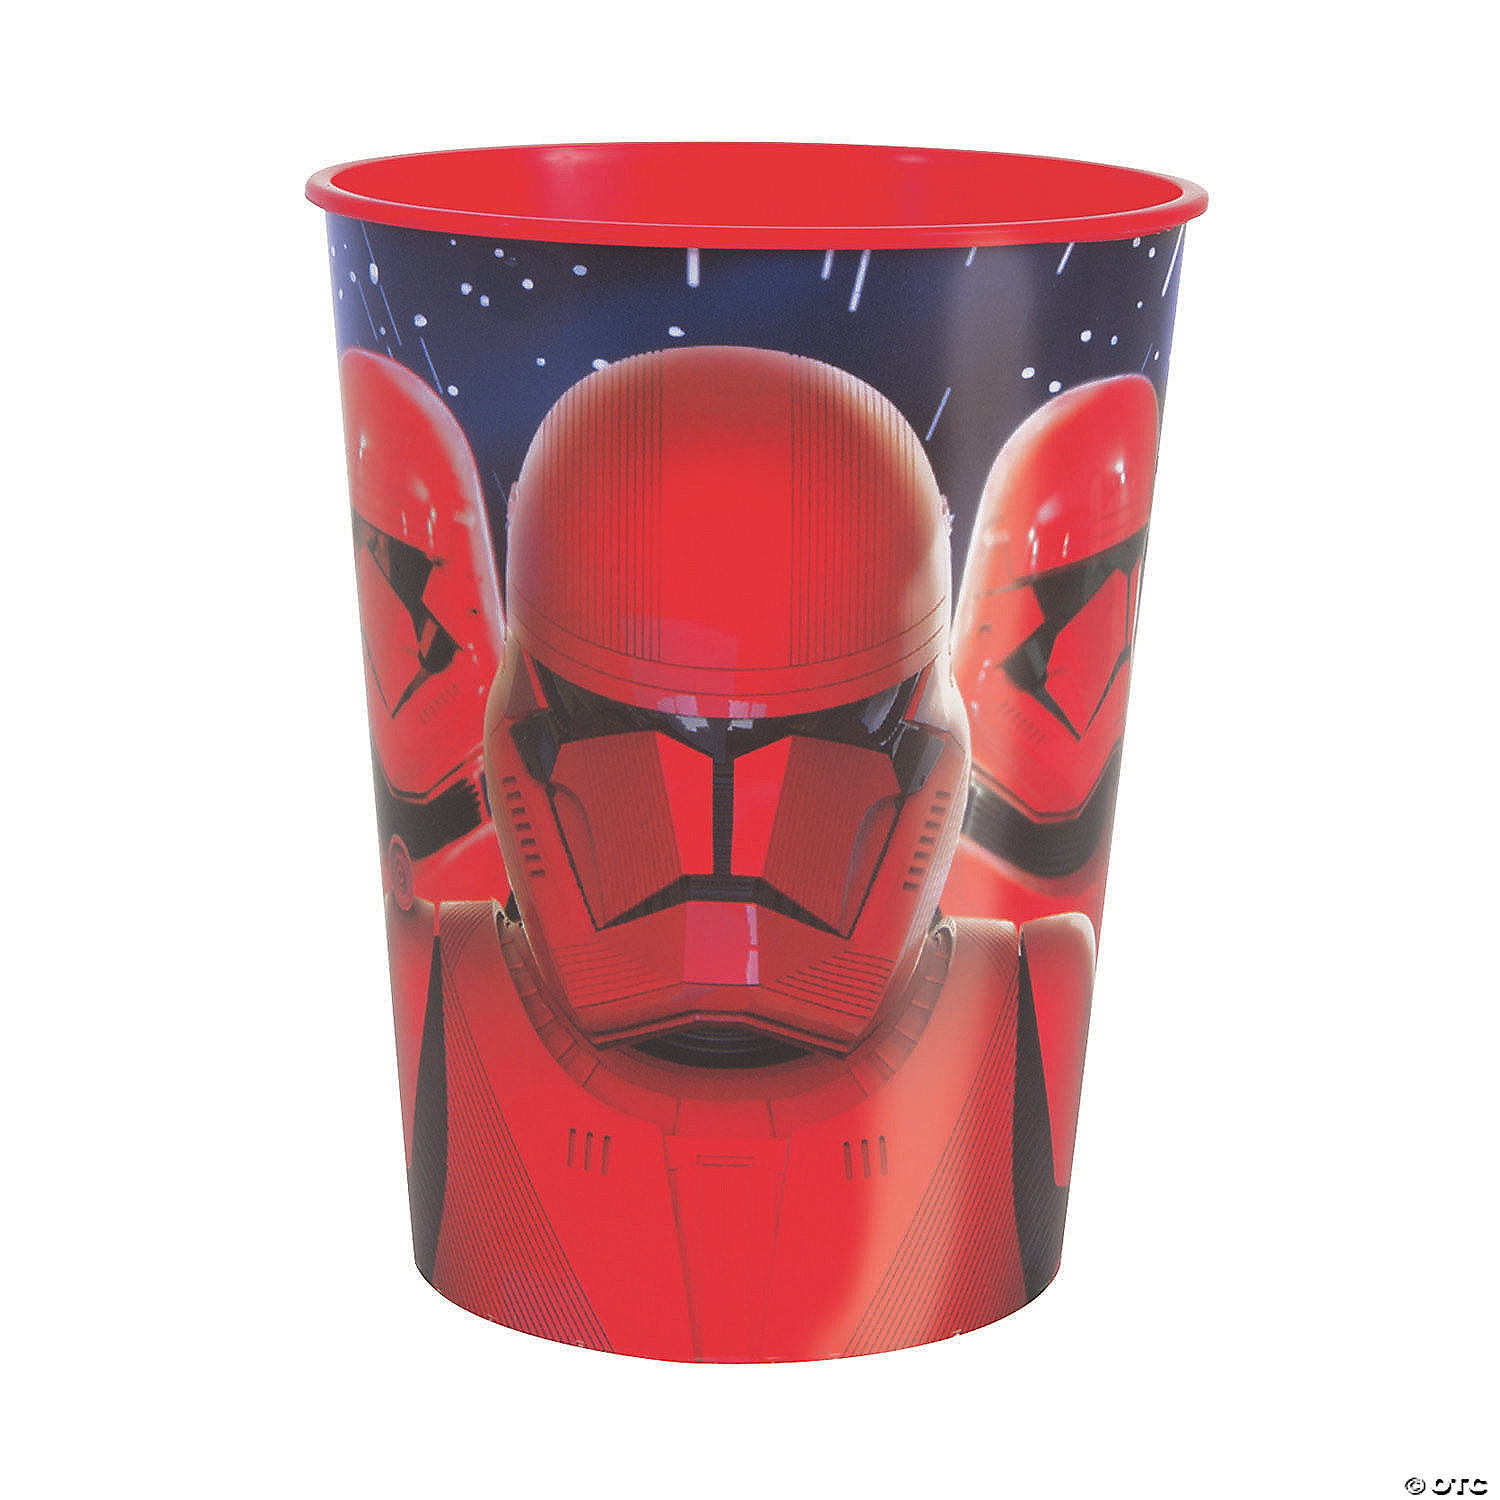 star wars tumbler cup